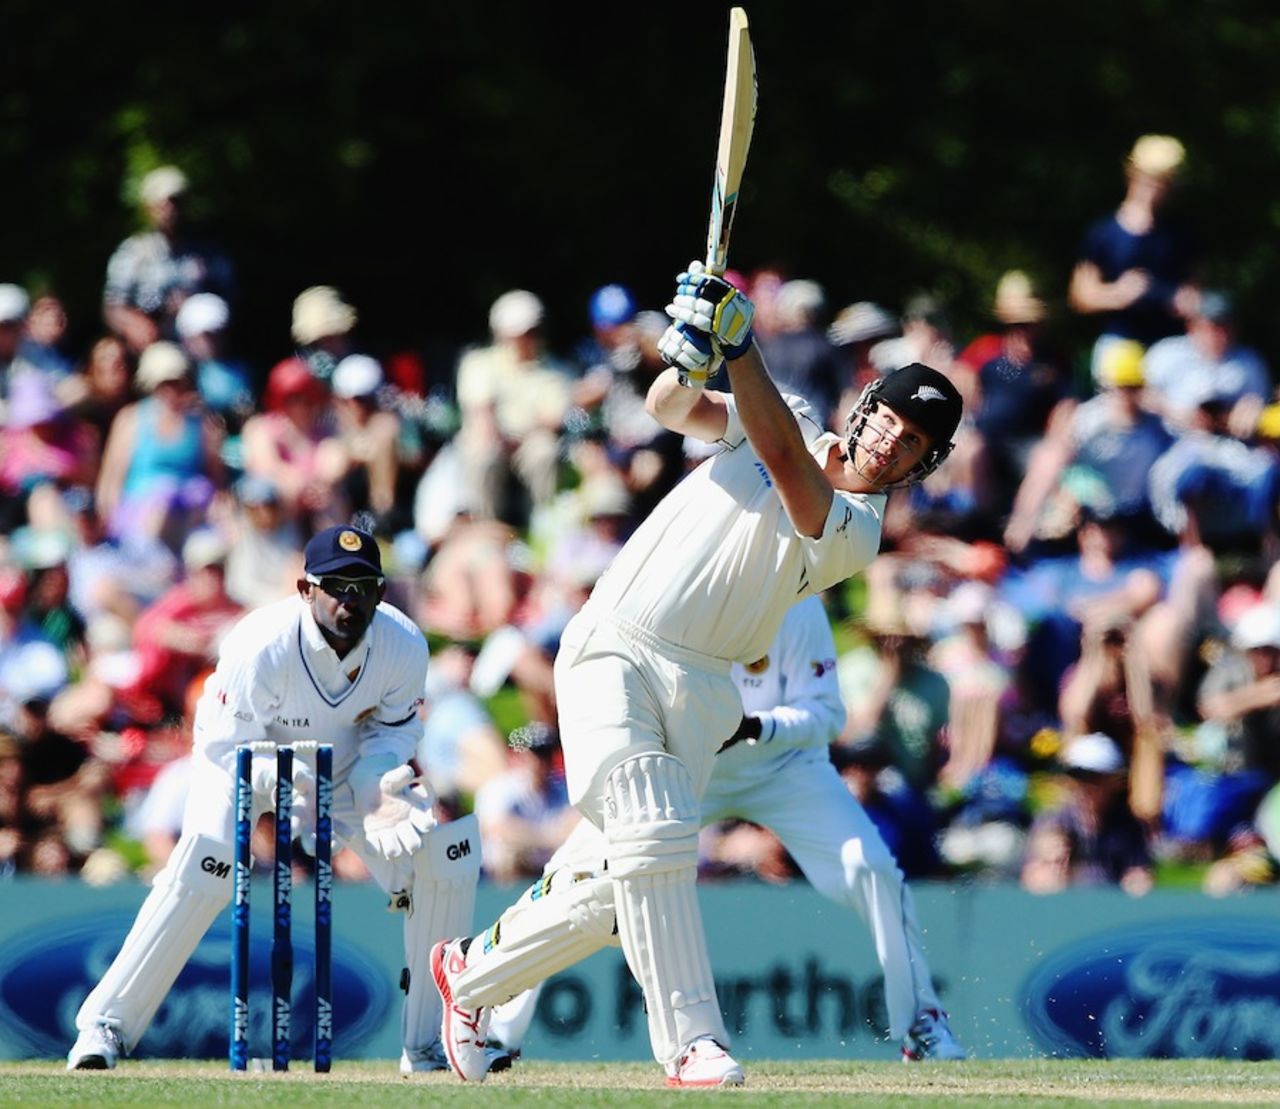 Jimmy Neesham hits over the top, New Zealand v Sri Lanka, 1st Test, Christchurch, 1st day, December 26, 2014